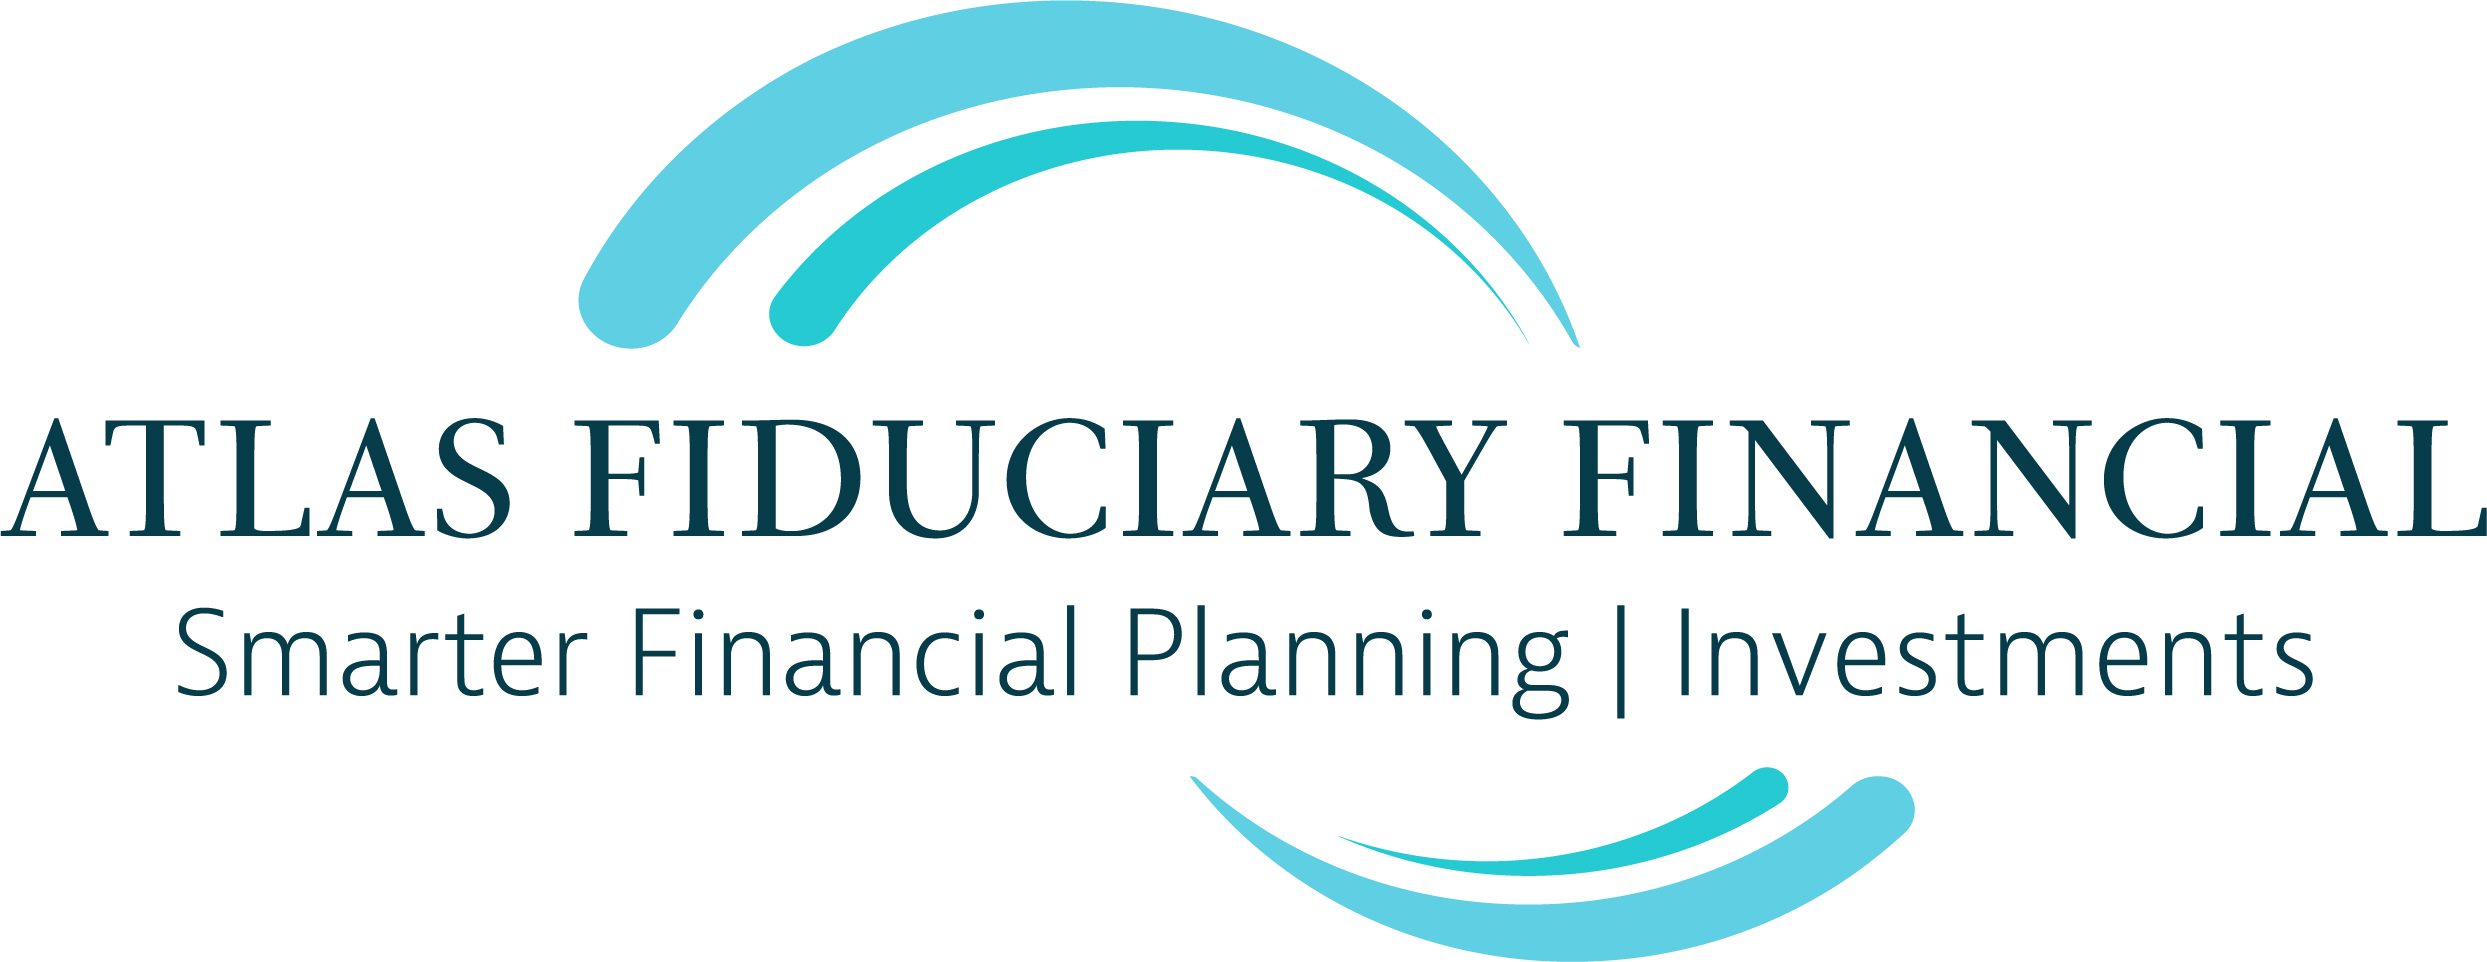 Atlas Fiduciary Financial, LLC